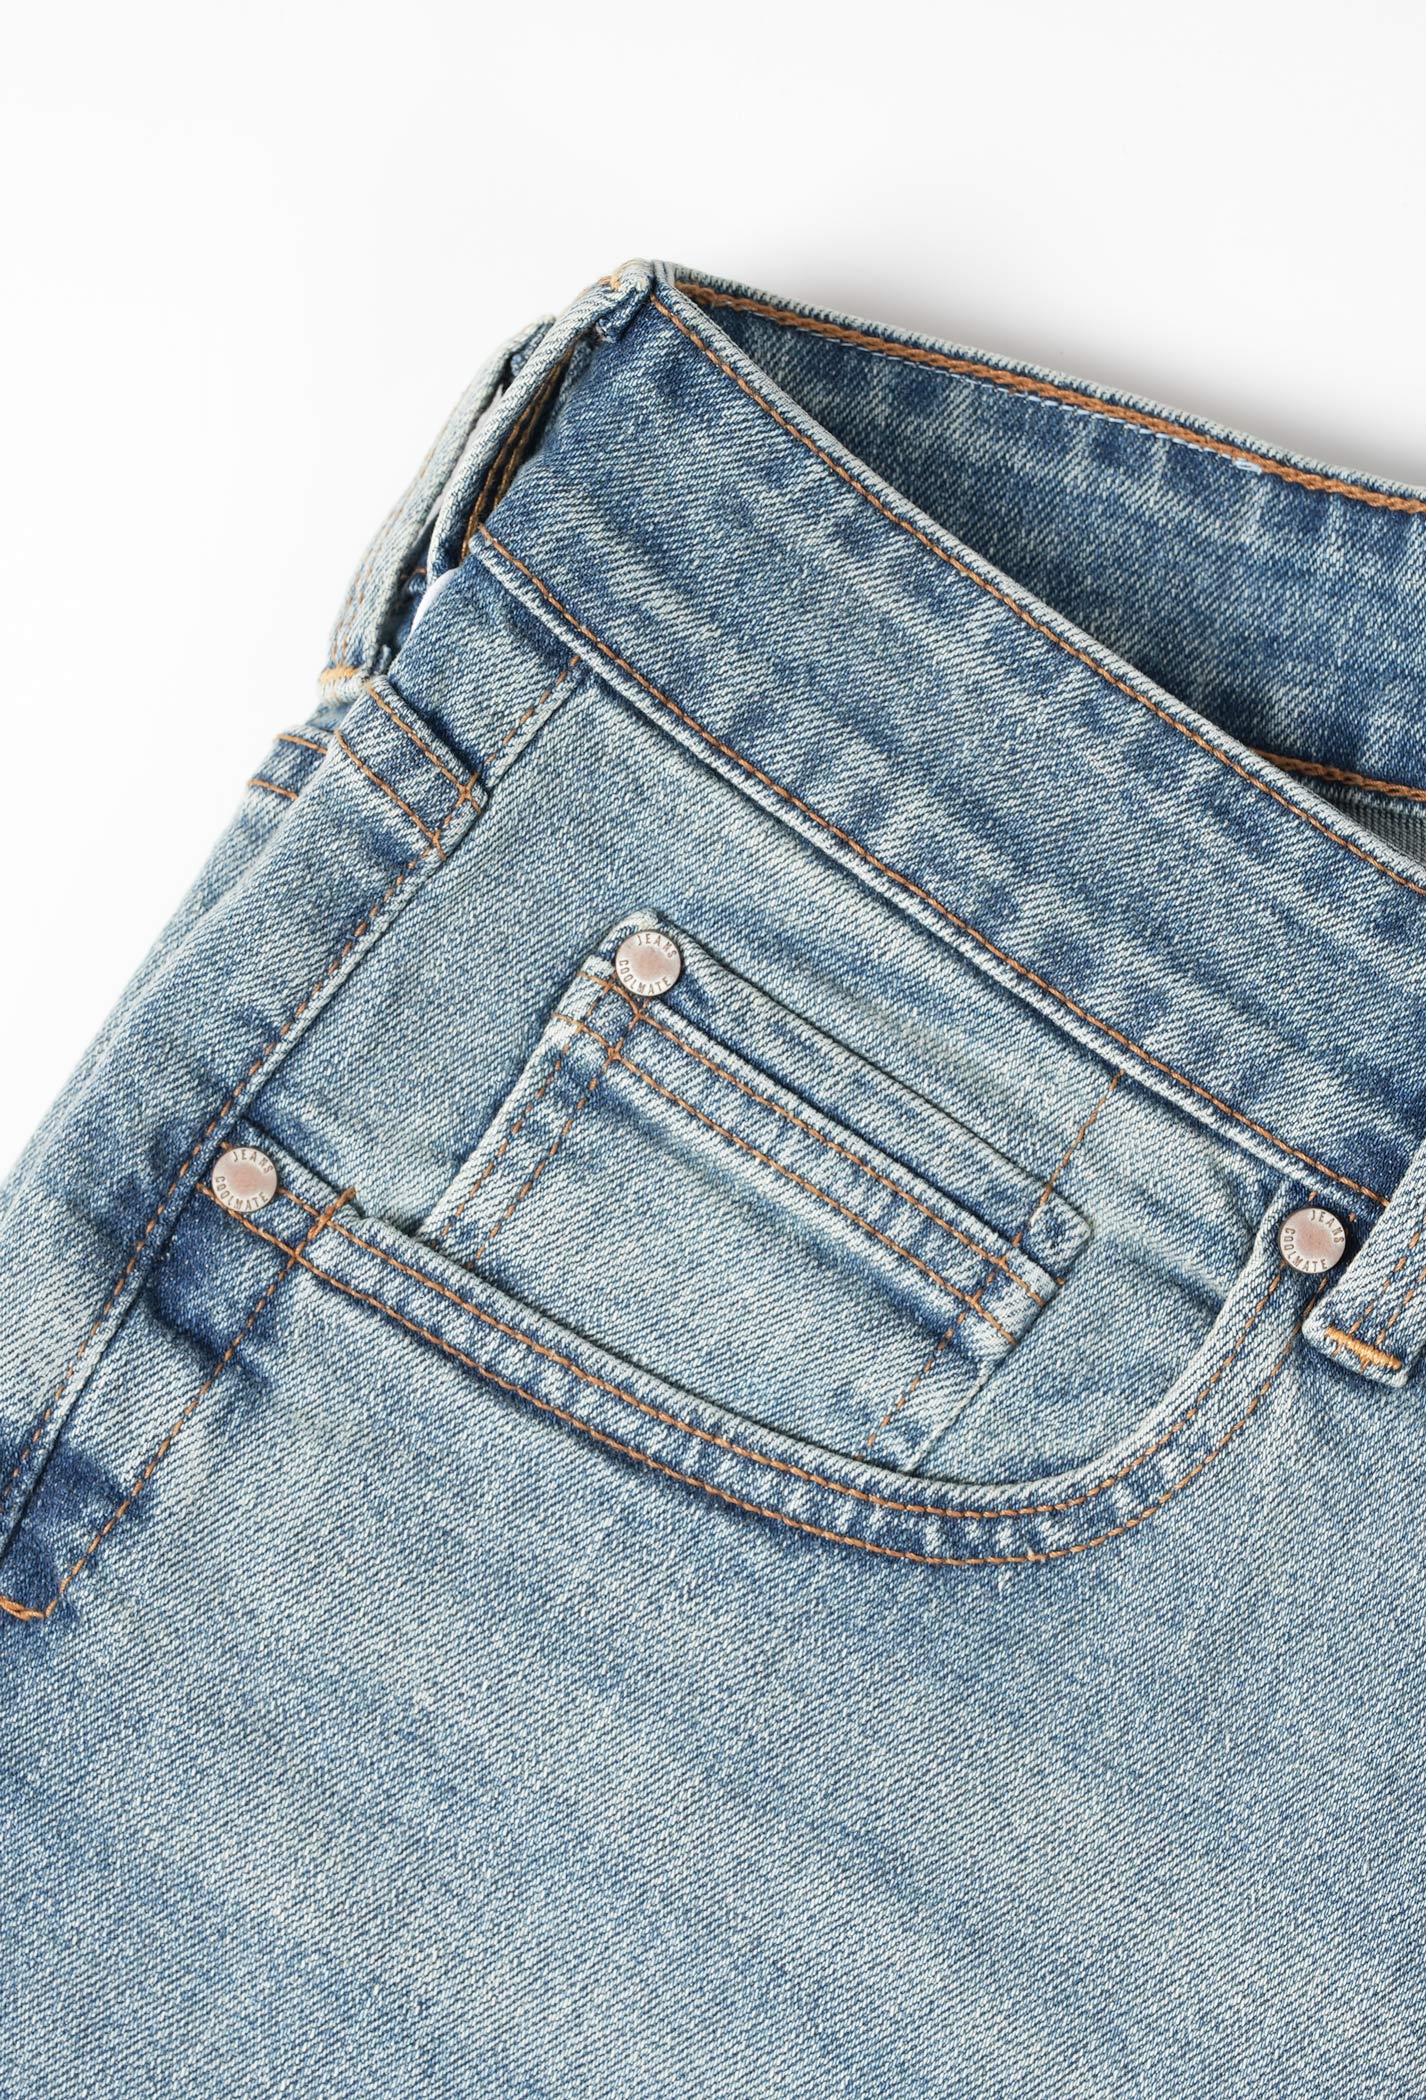 OUTLET - Quần Jeans Basic Slim V2 Xanh nhạt 8